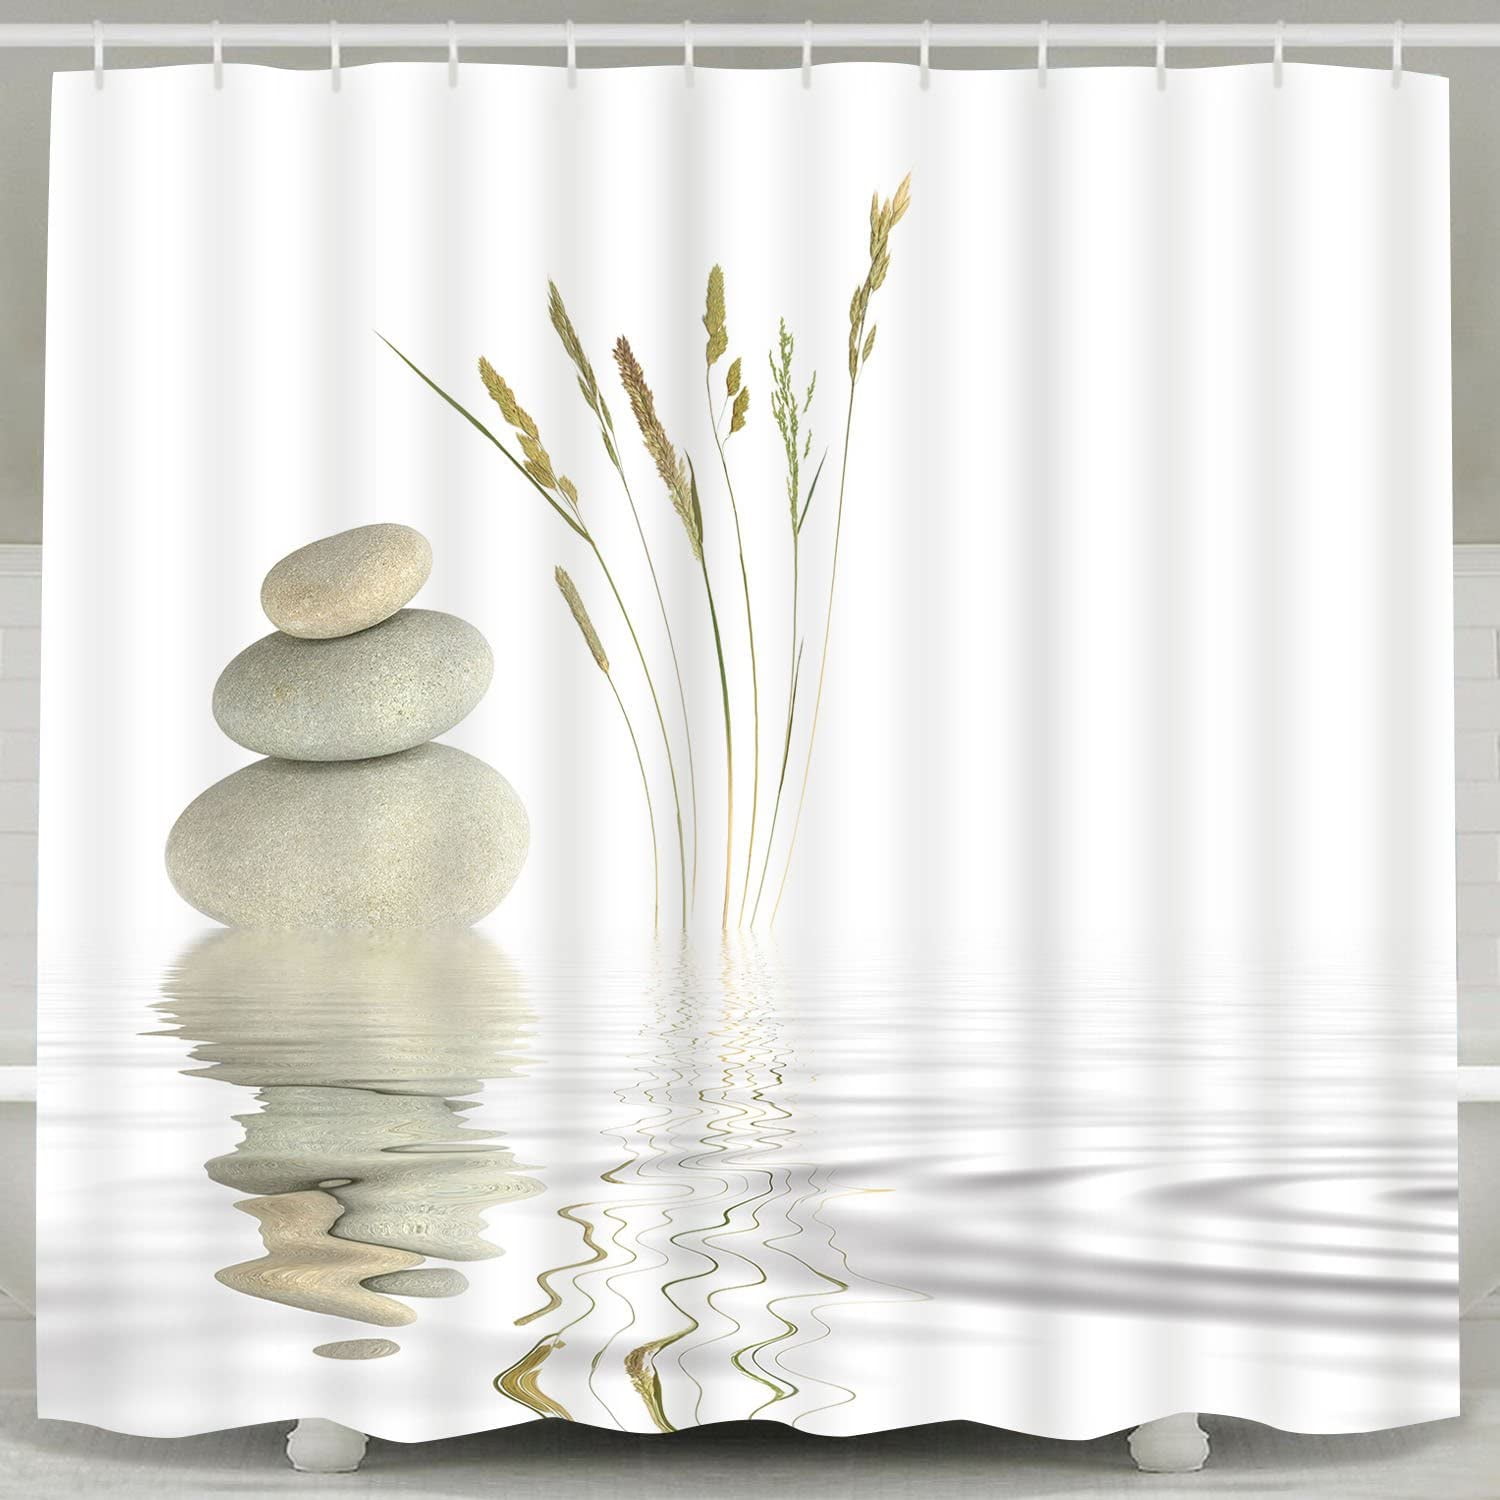 Waterproof Fabric Health Spa Zen Shower Curtain Liner Bathroom Bath Mat & Hooks 